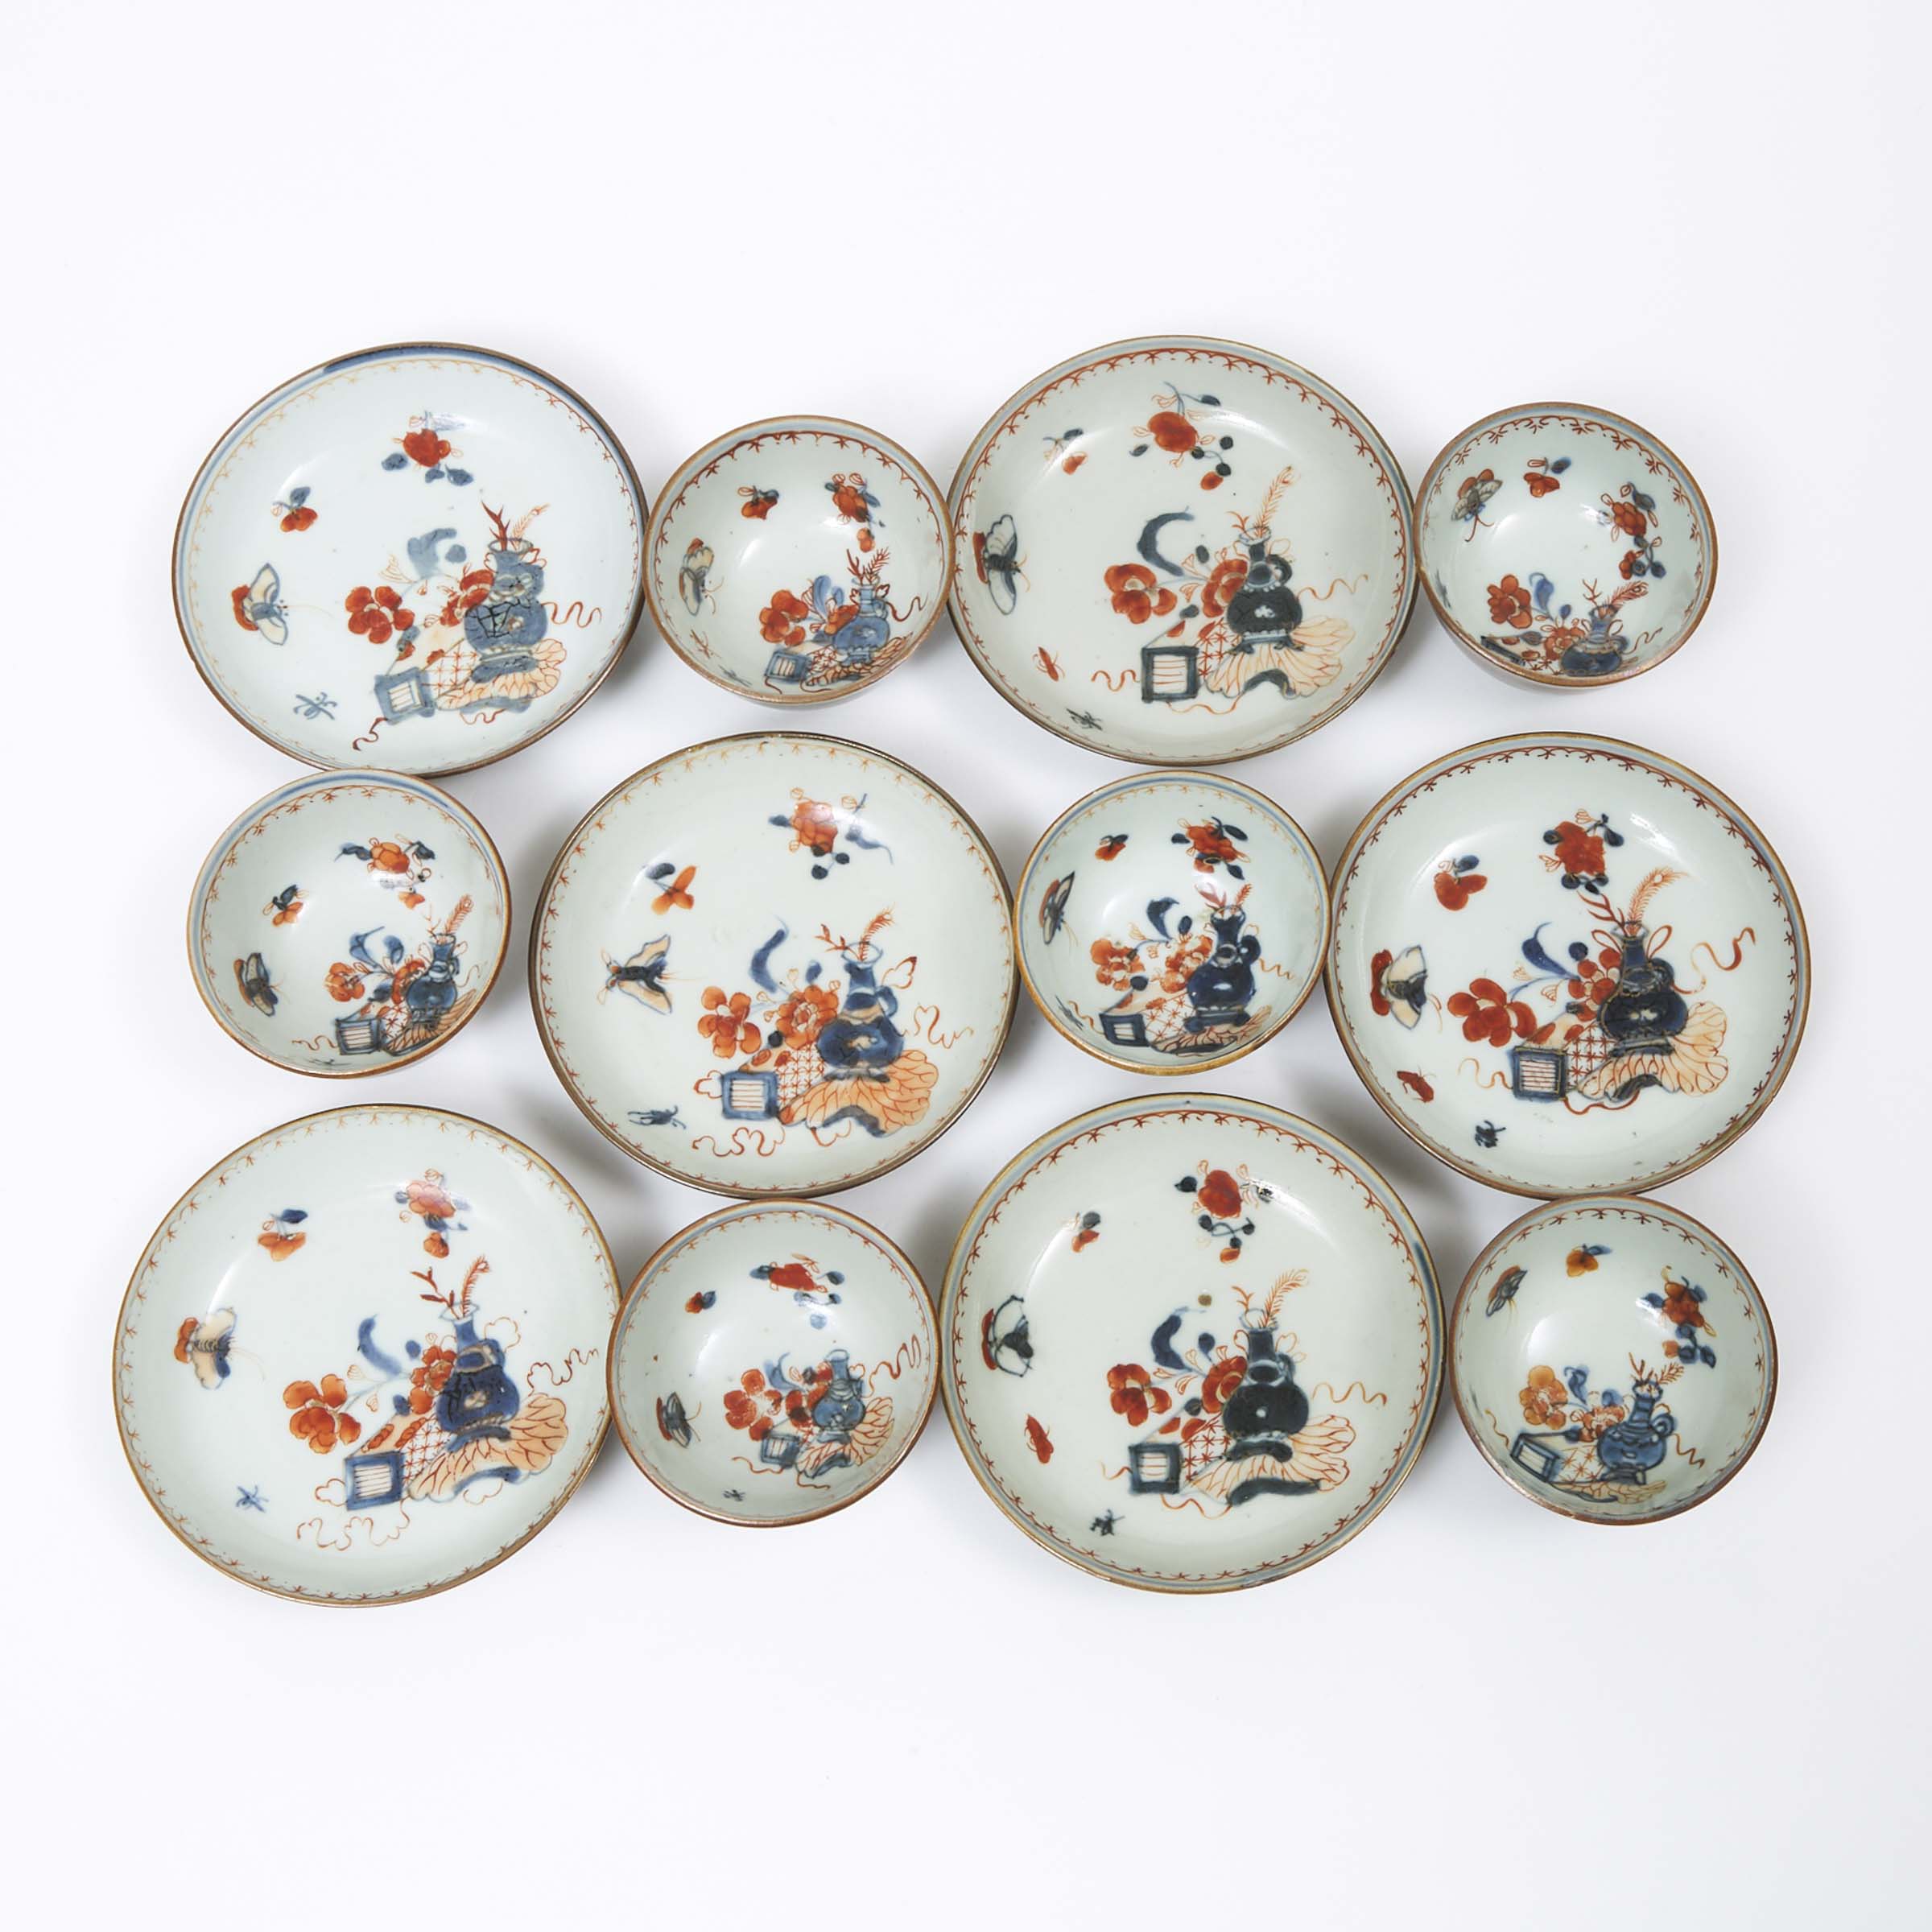 A Set of Twelve Chinese Imari Cafe-au-Lait Teacups and Saucers, 18th Century